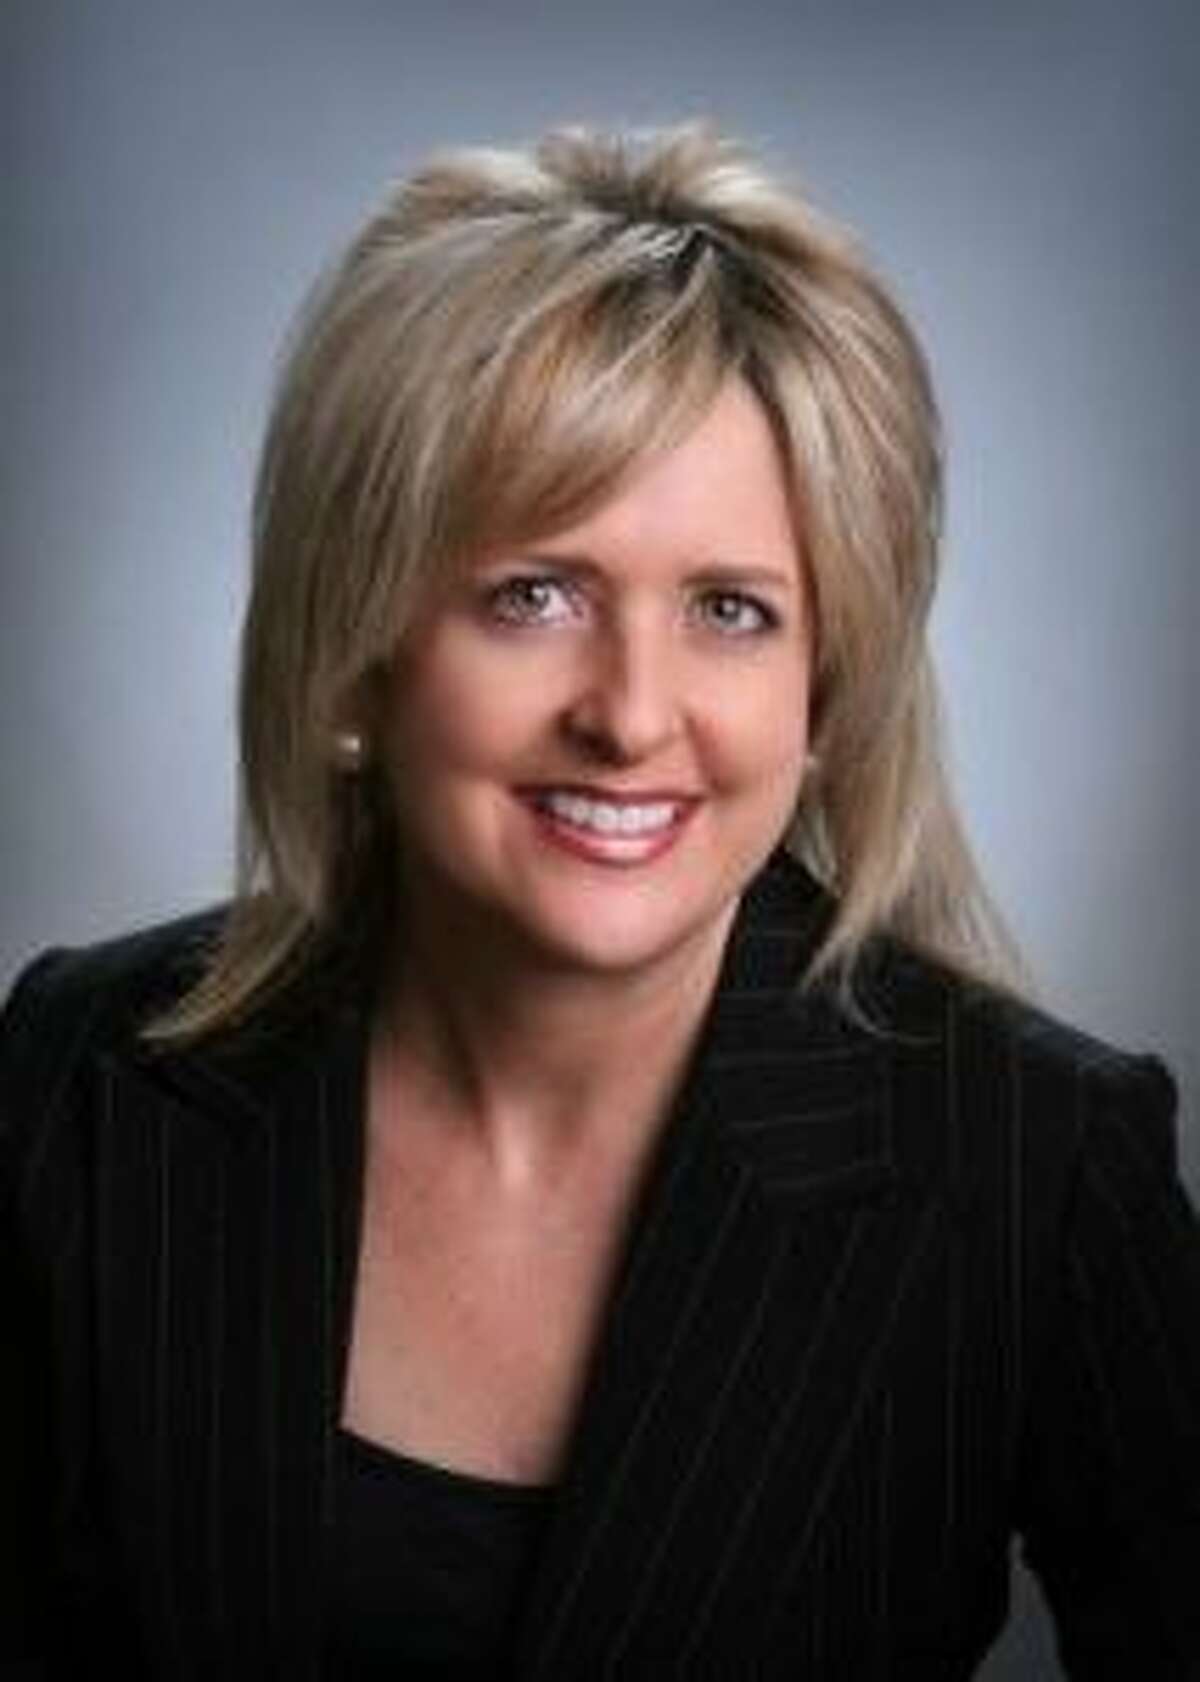 Beaverton Superintendent Susan Wooden